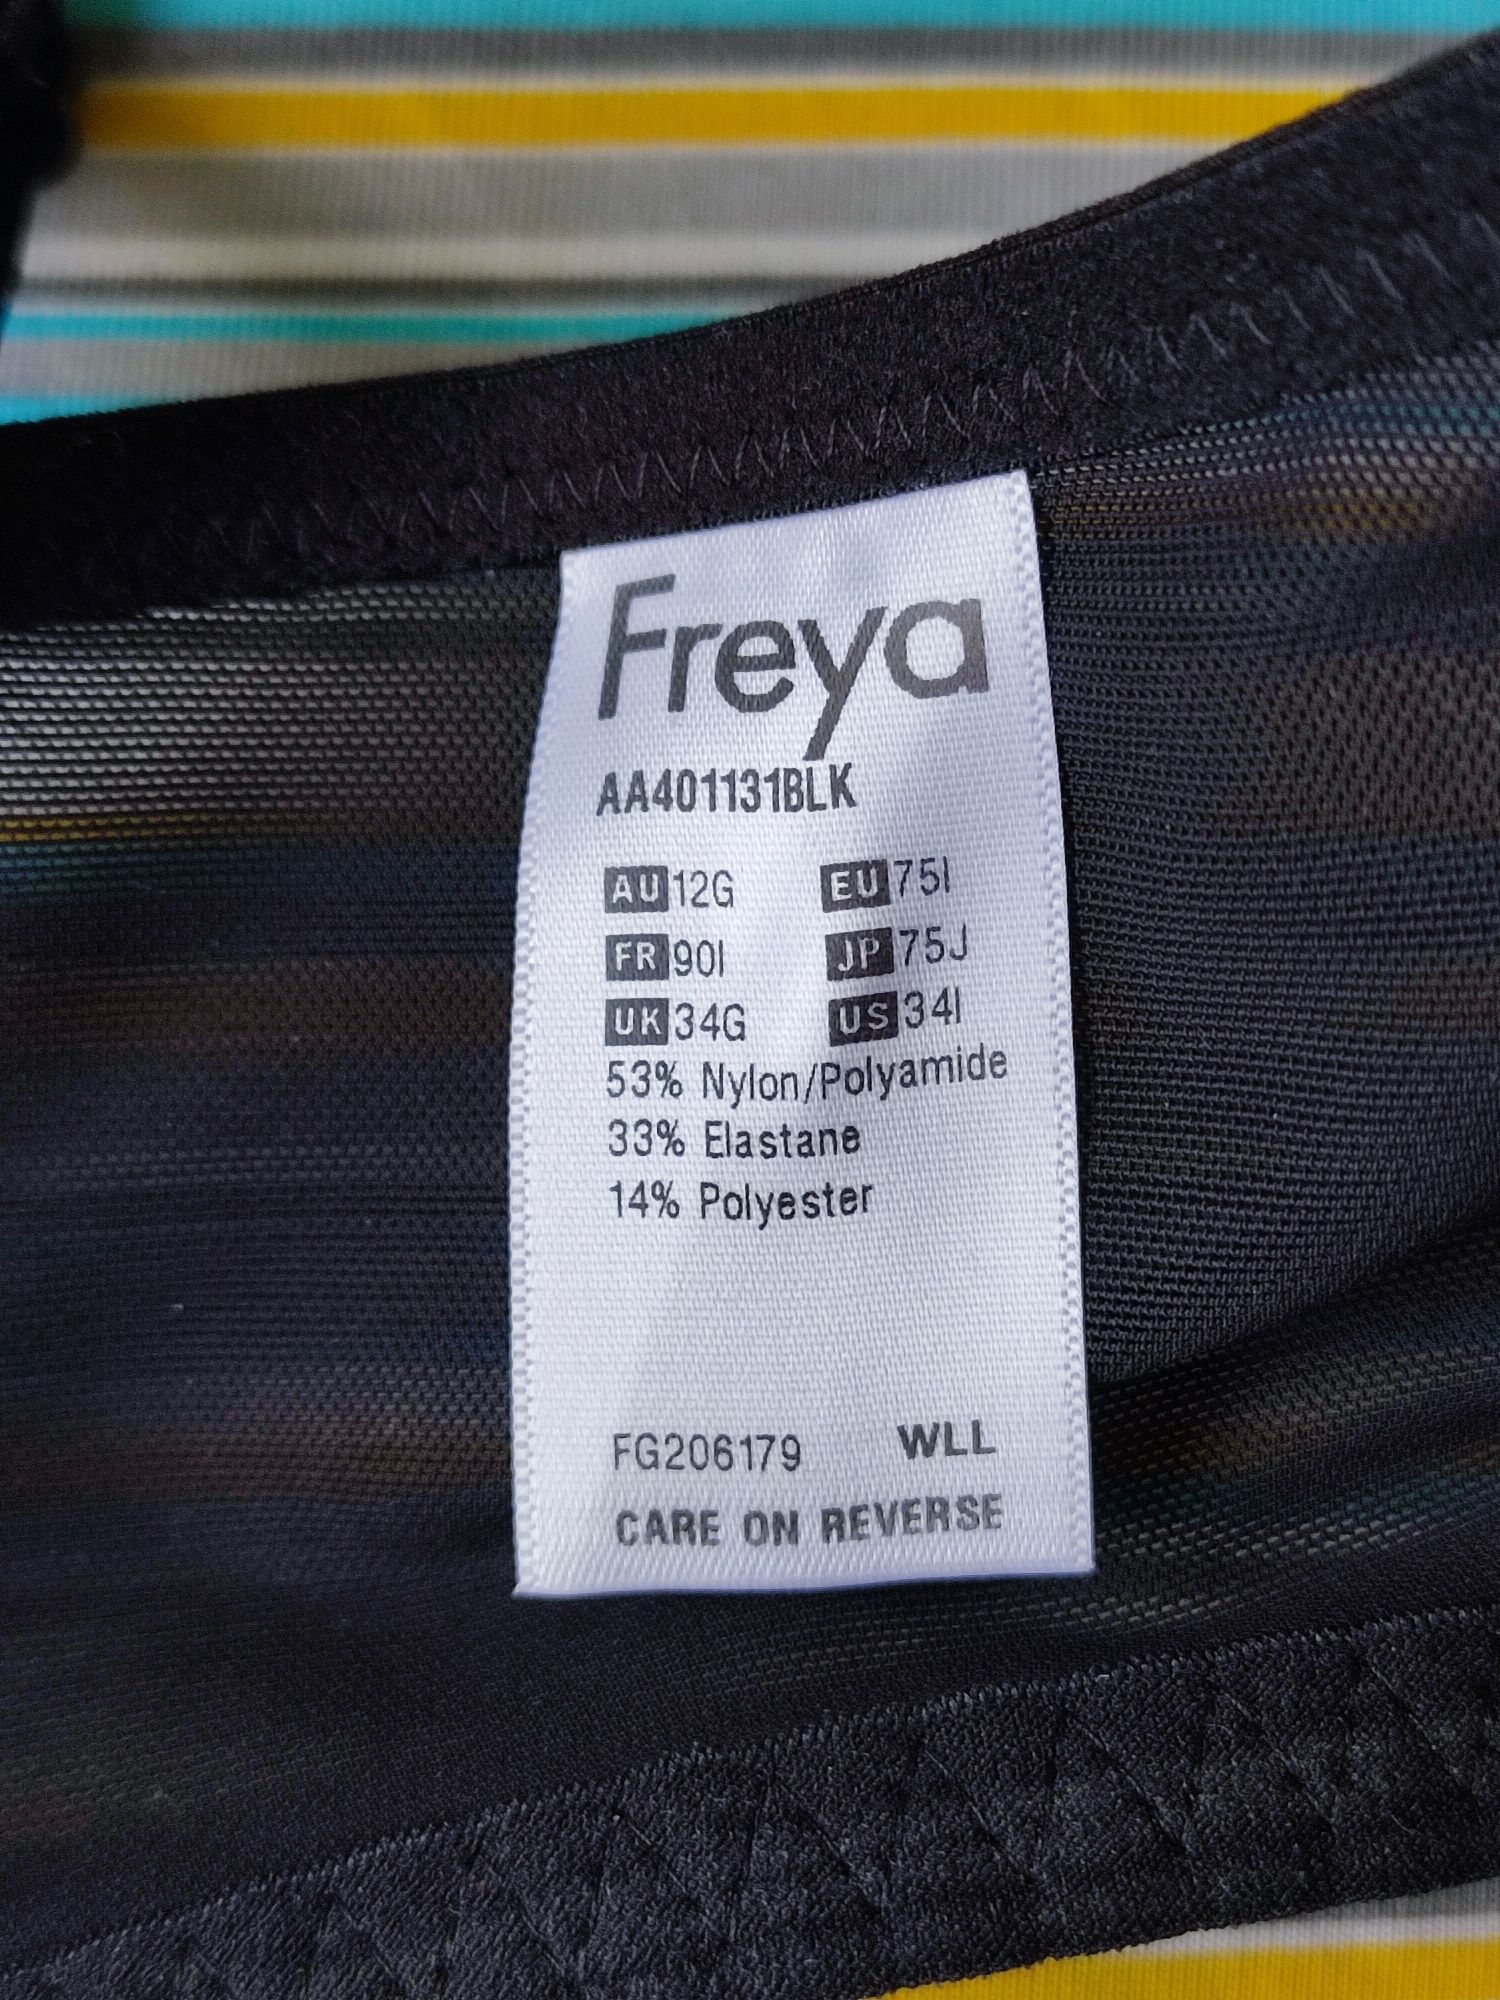 Freya tailored biustonosz UK 34g eu 75i